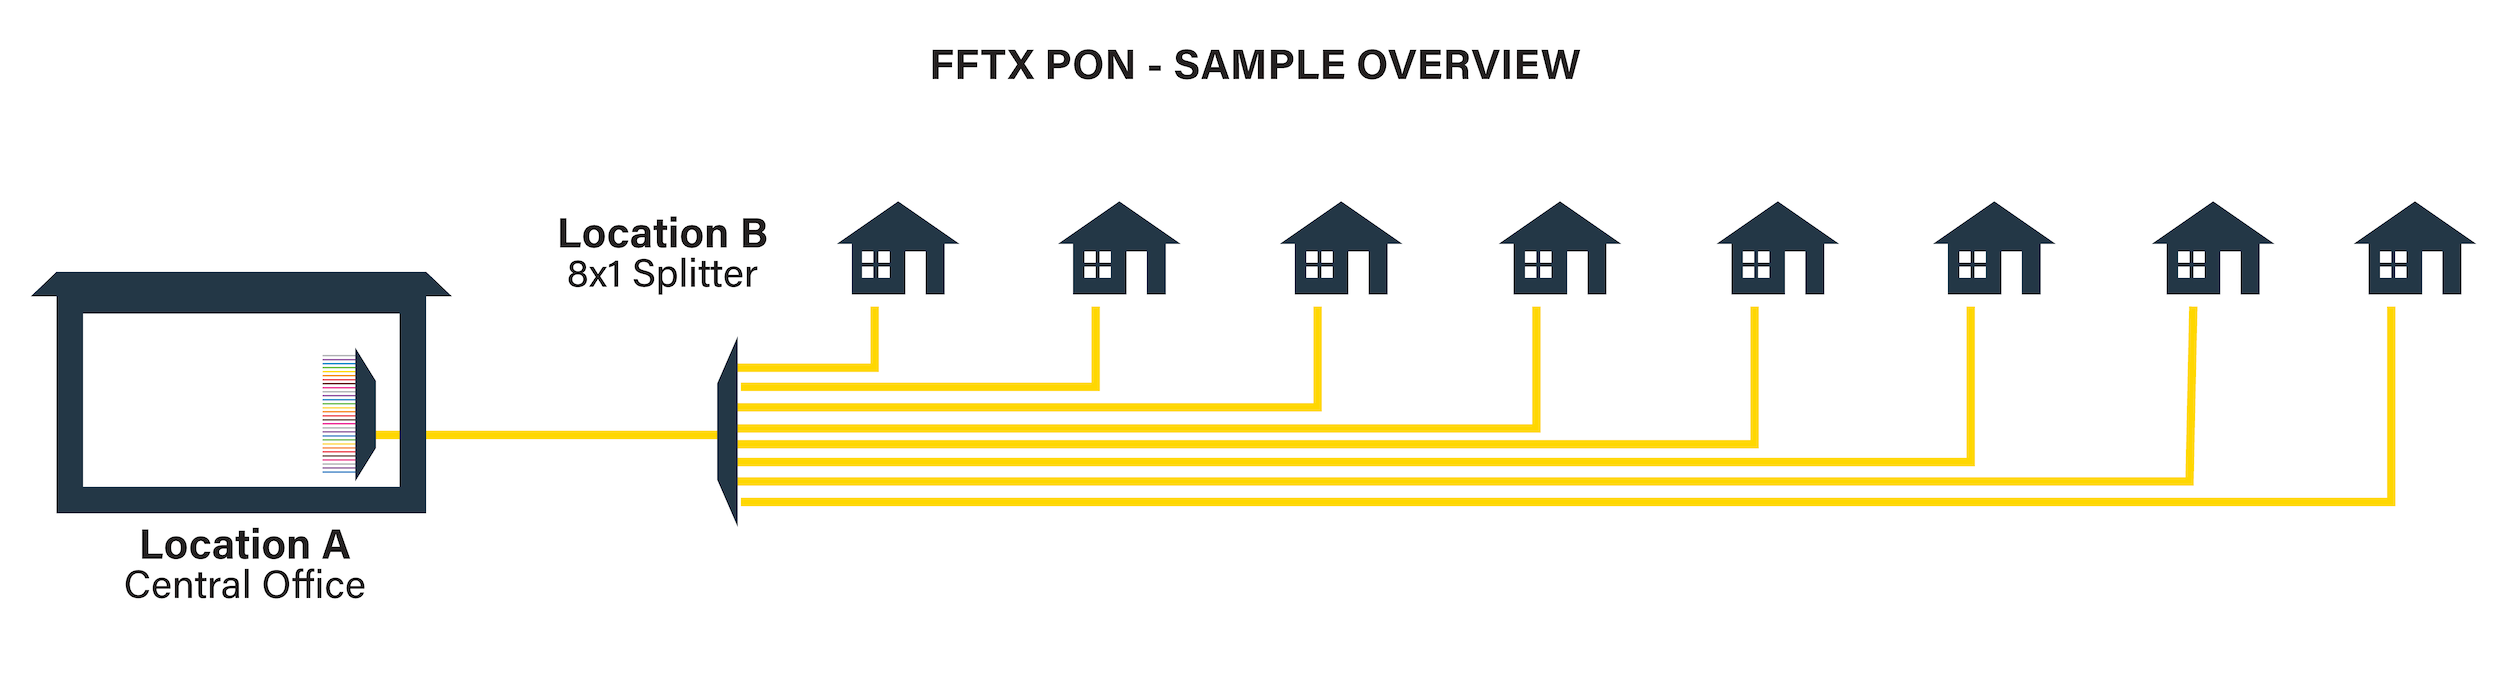 FFTX PON sample overview